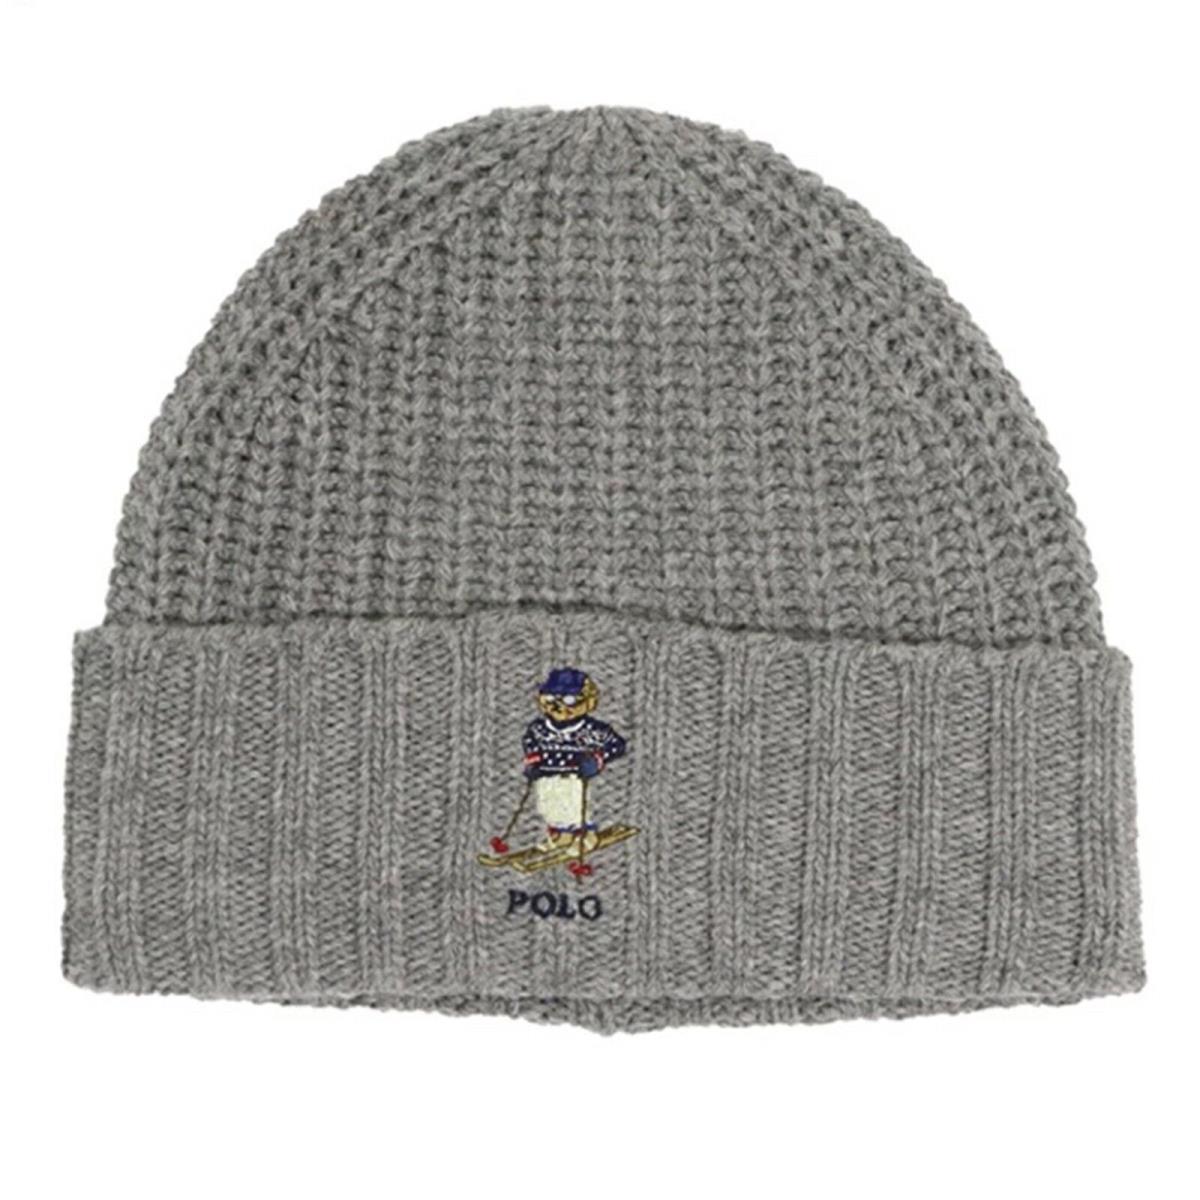 Polo Ralph Lauren Preppy Bear Polo Bear Stocking Cap Hat Watch Cap with Skier